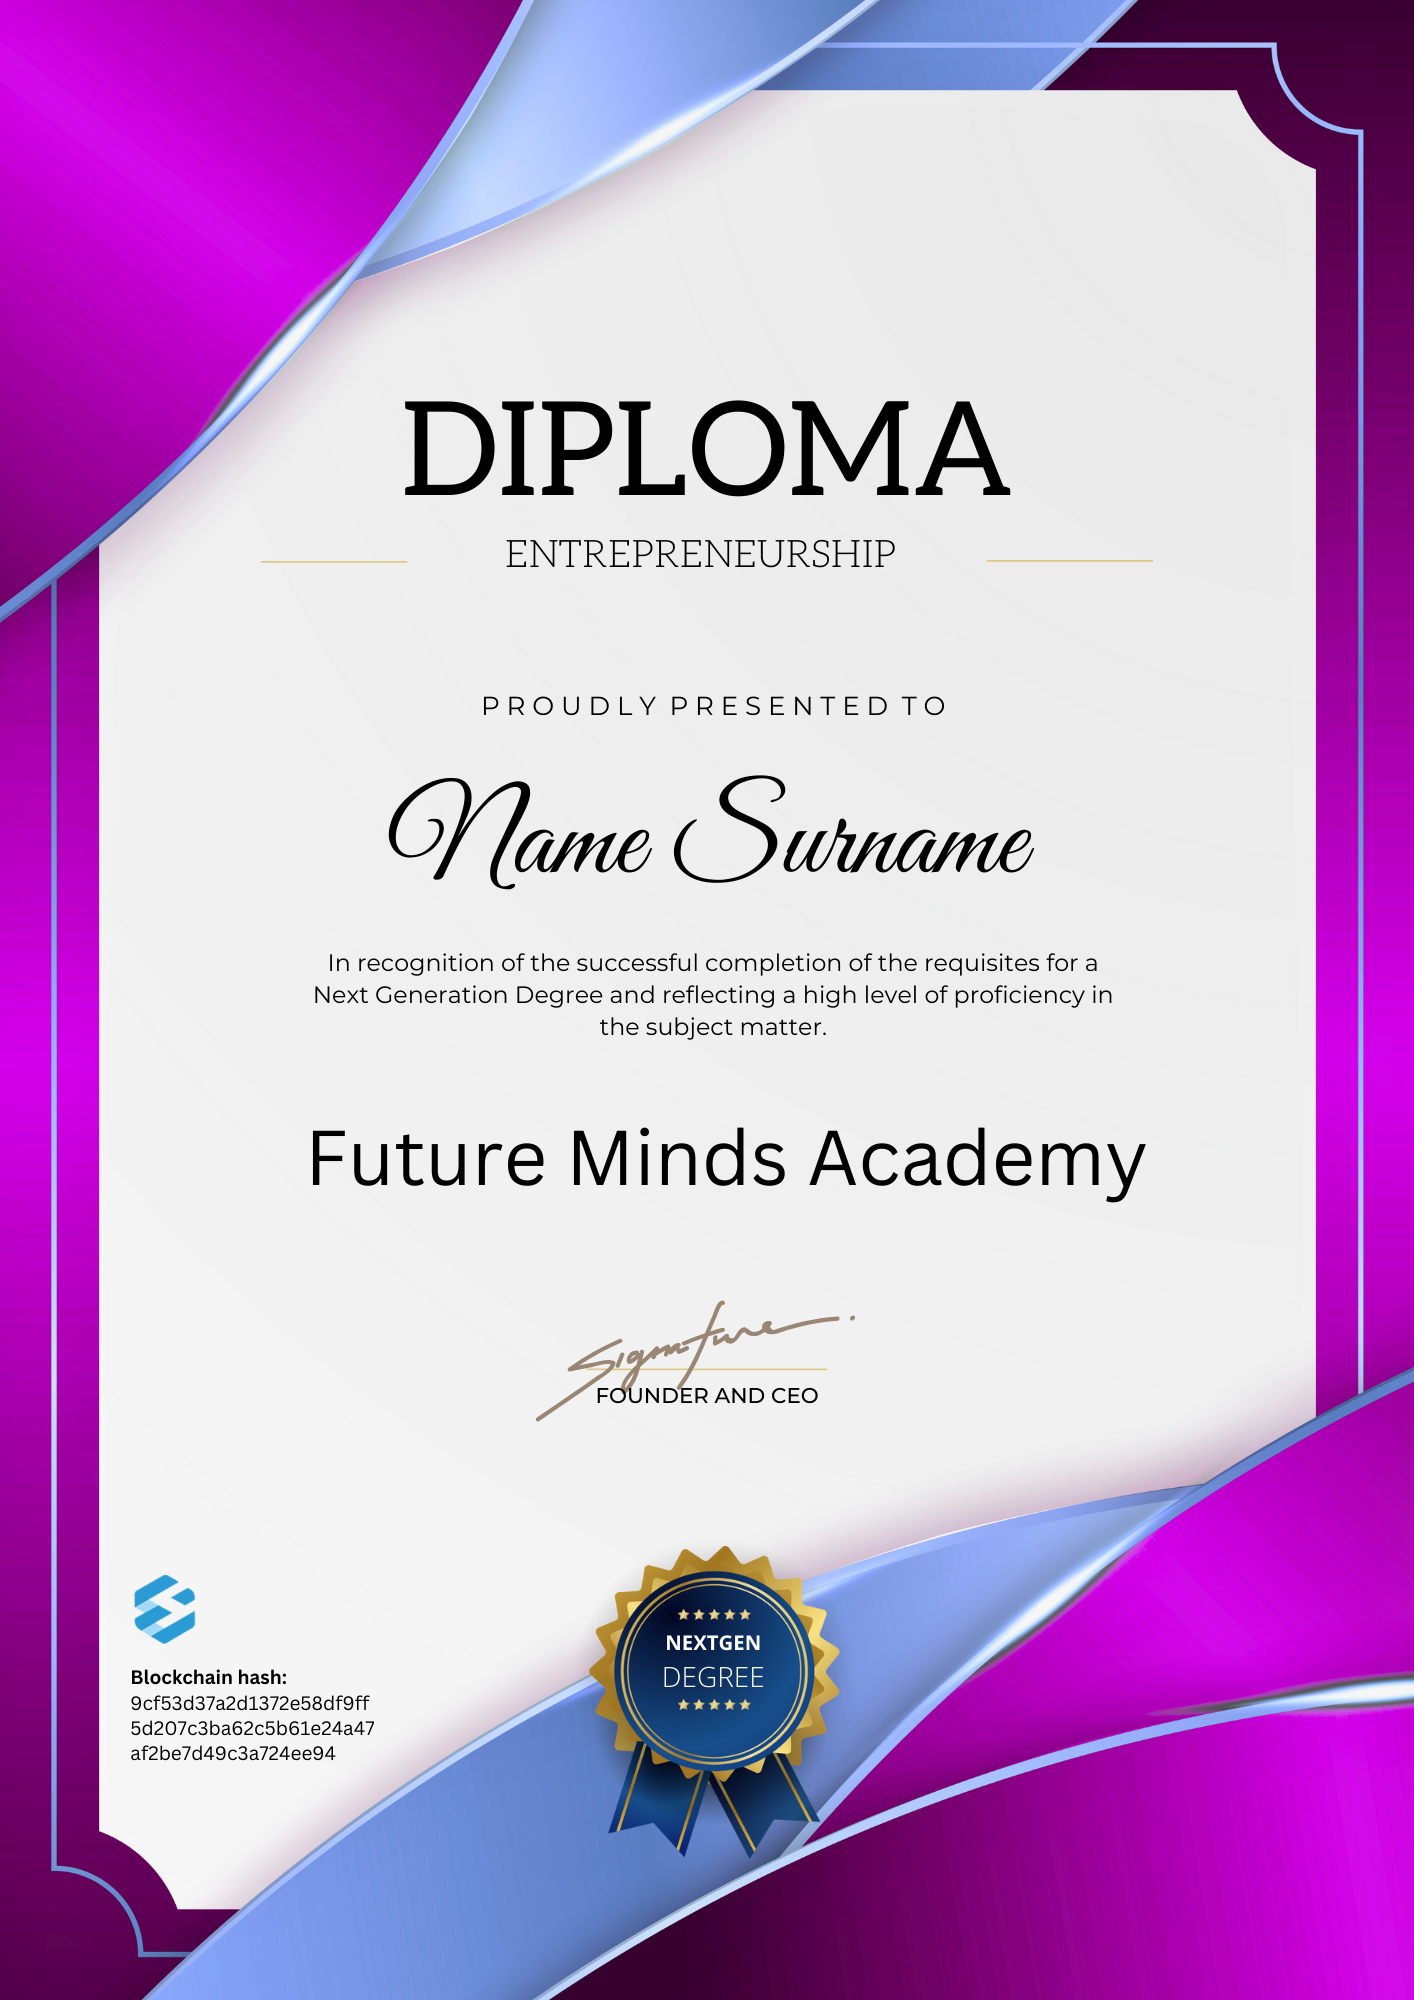 Diploma Entrepreneurship